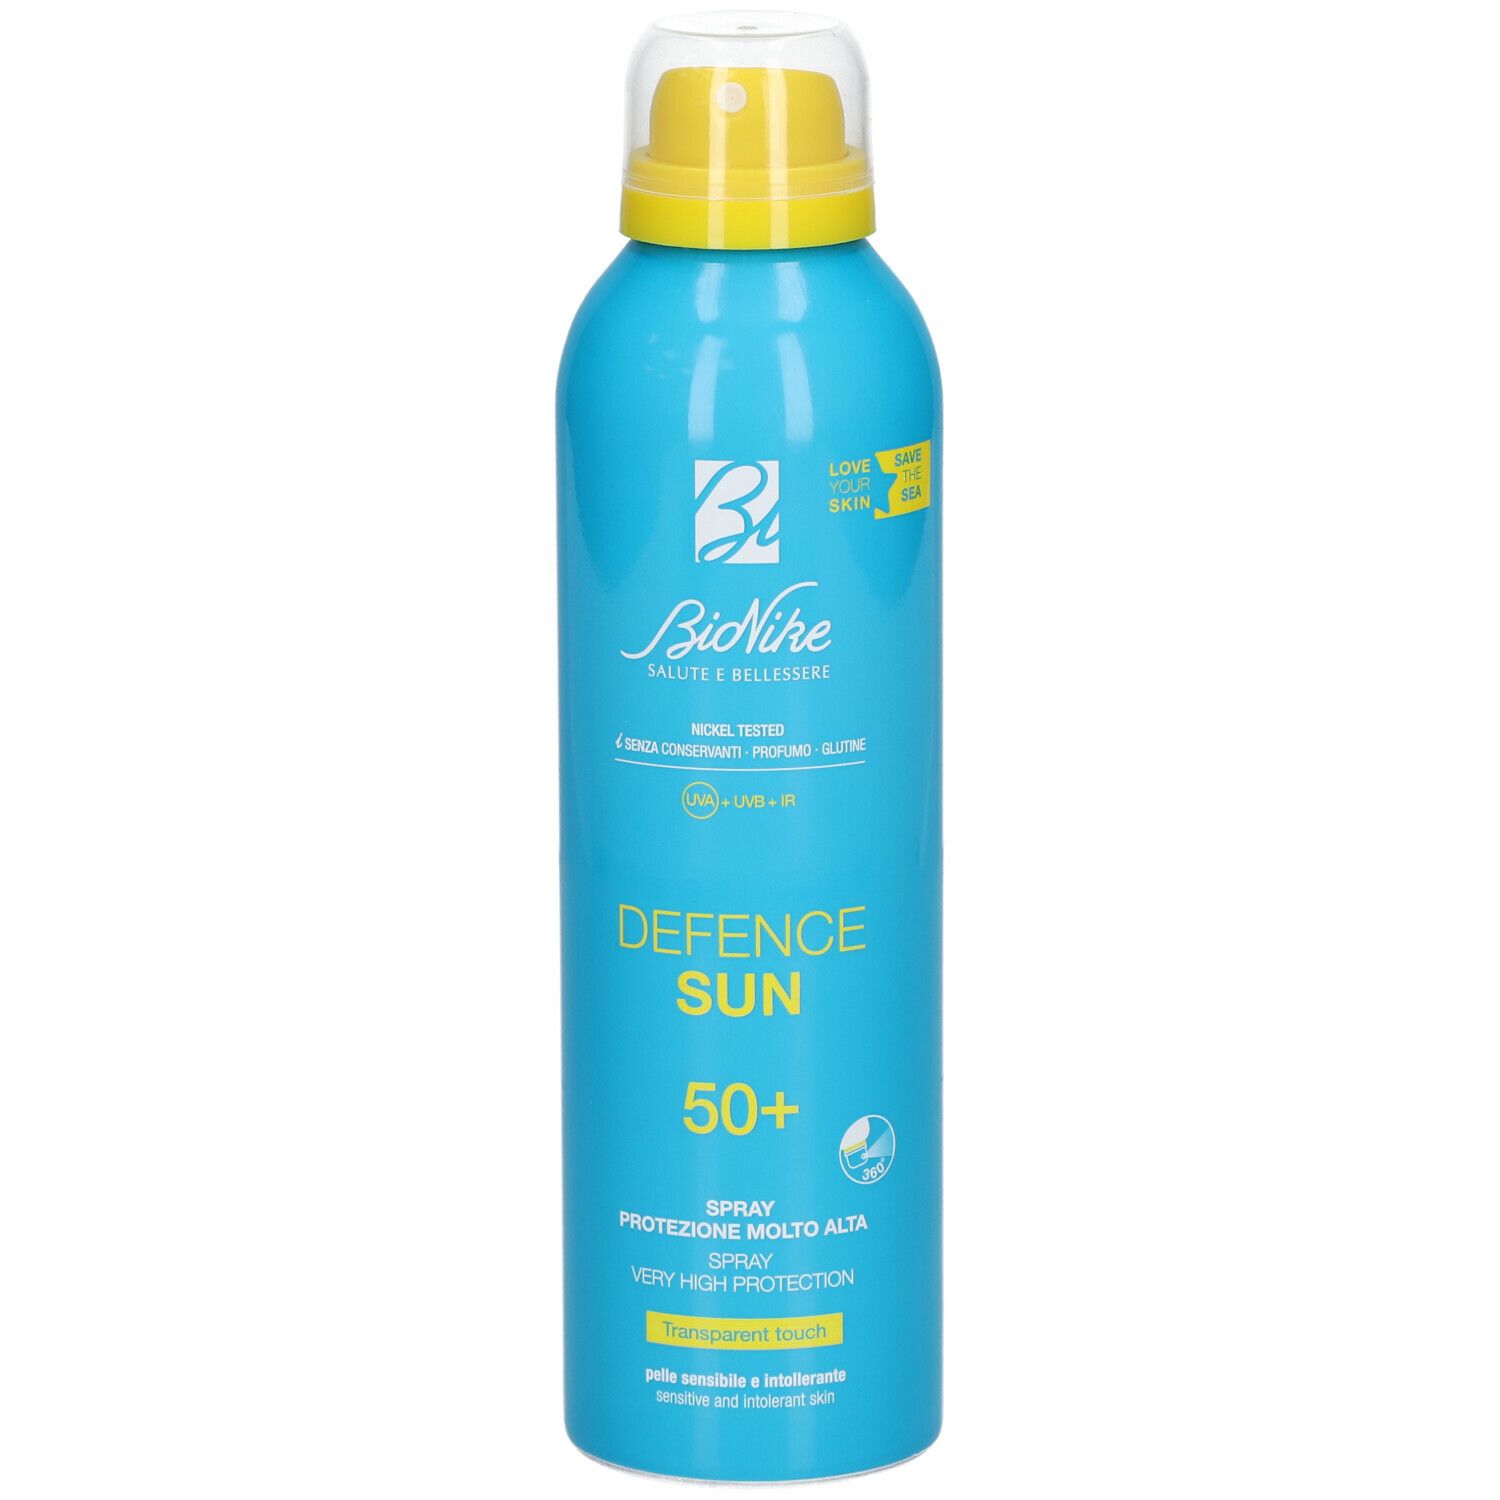 BioNike Defence Sun Spray SPF 50+